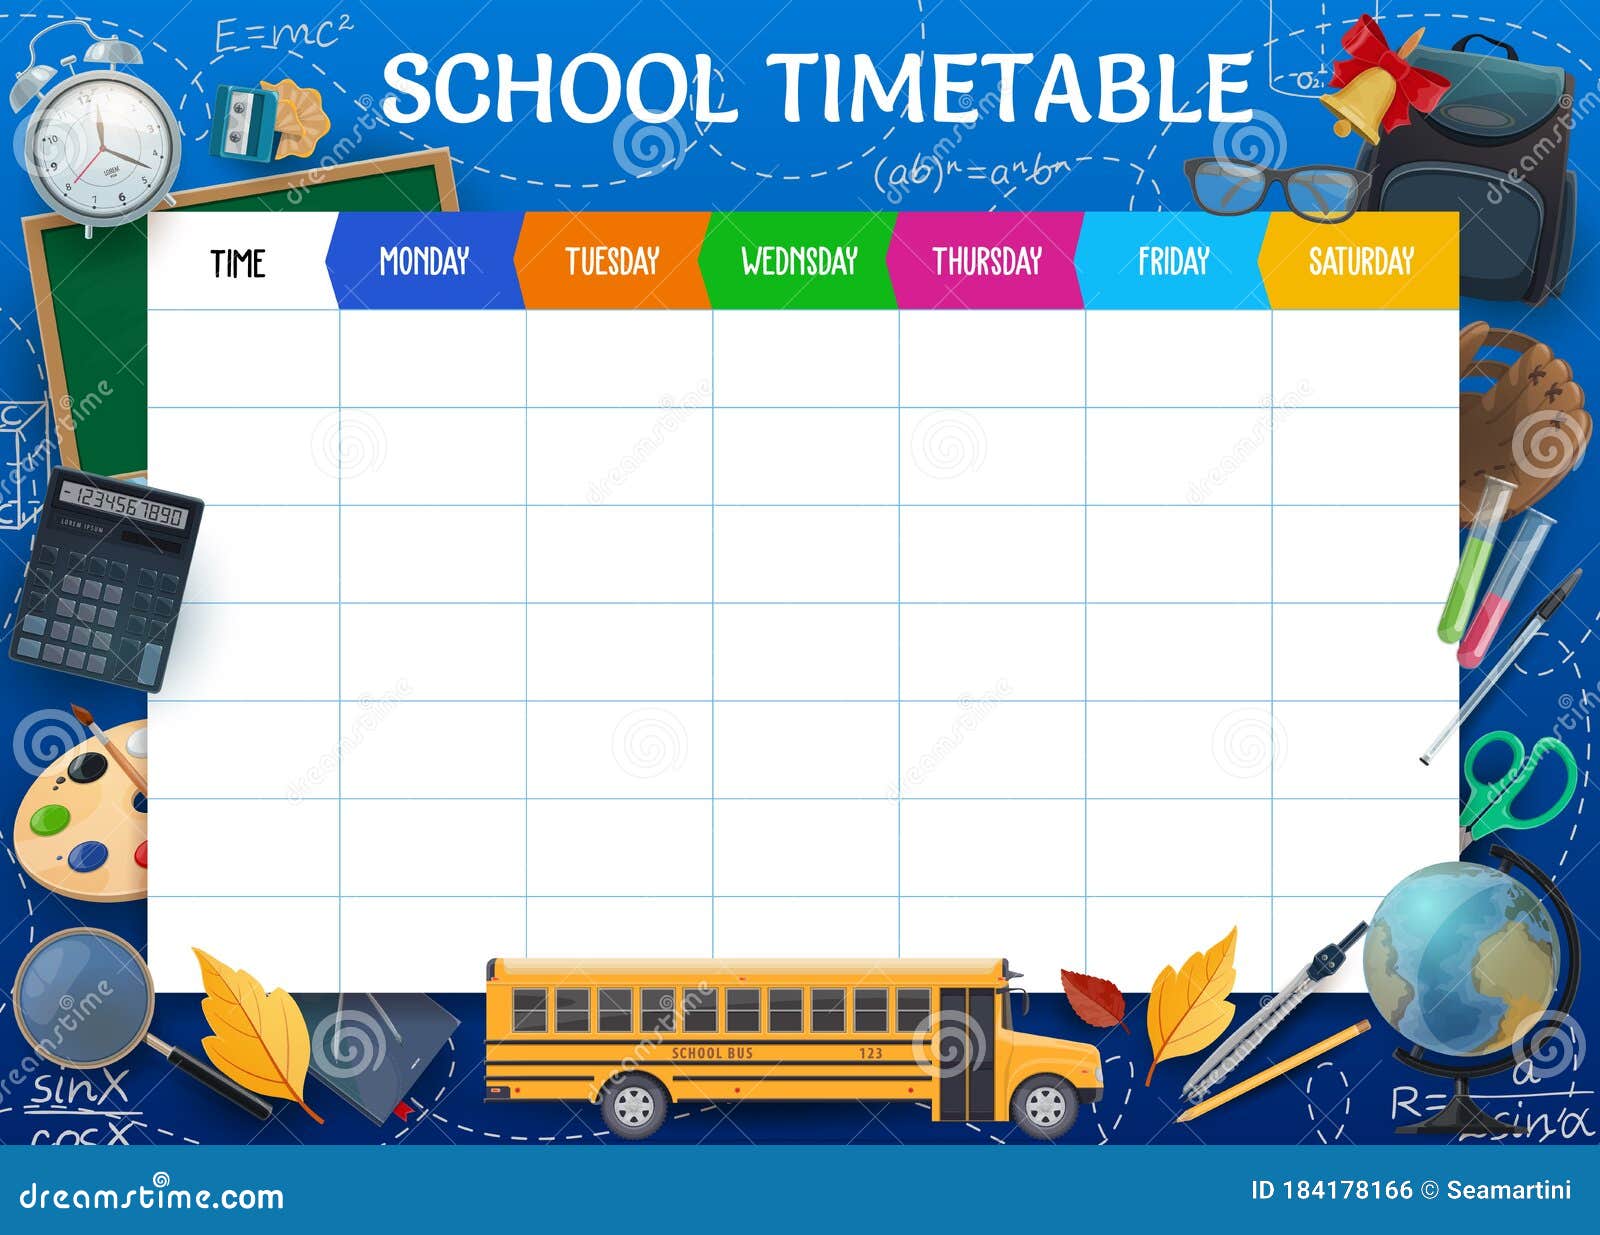 School Timetable Weekly Pupil Schedule Template Stock Vector